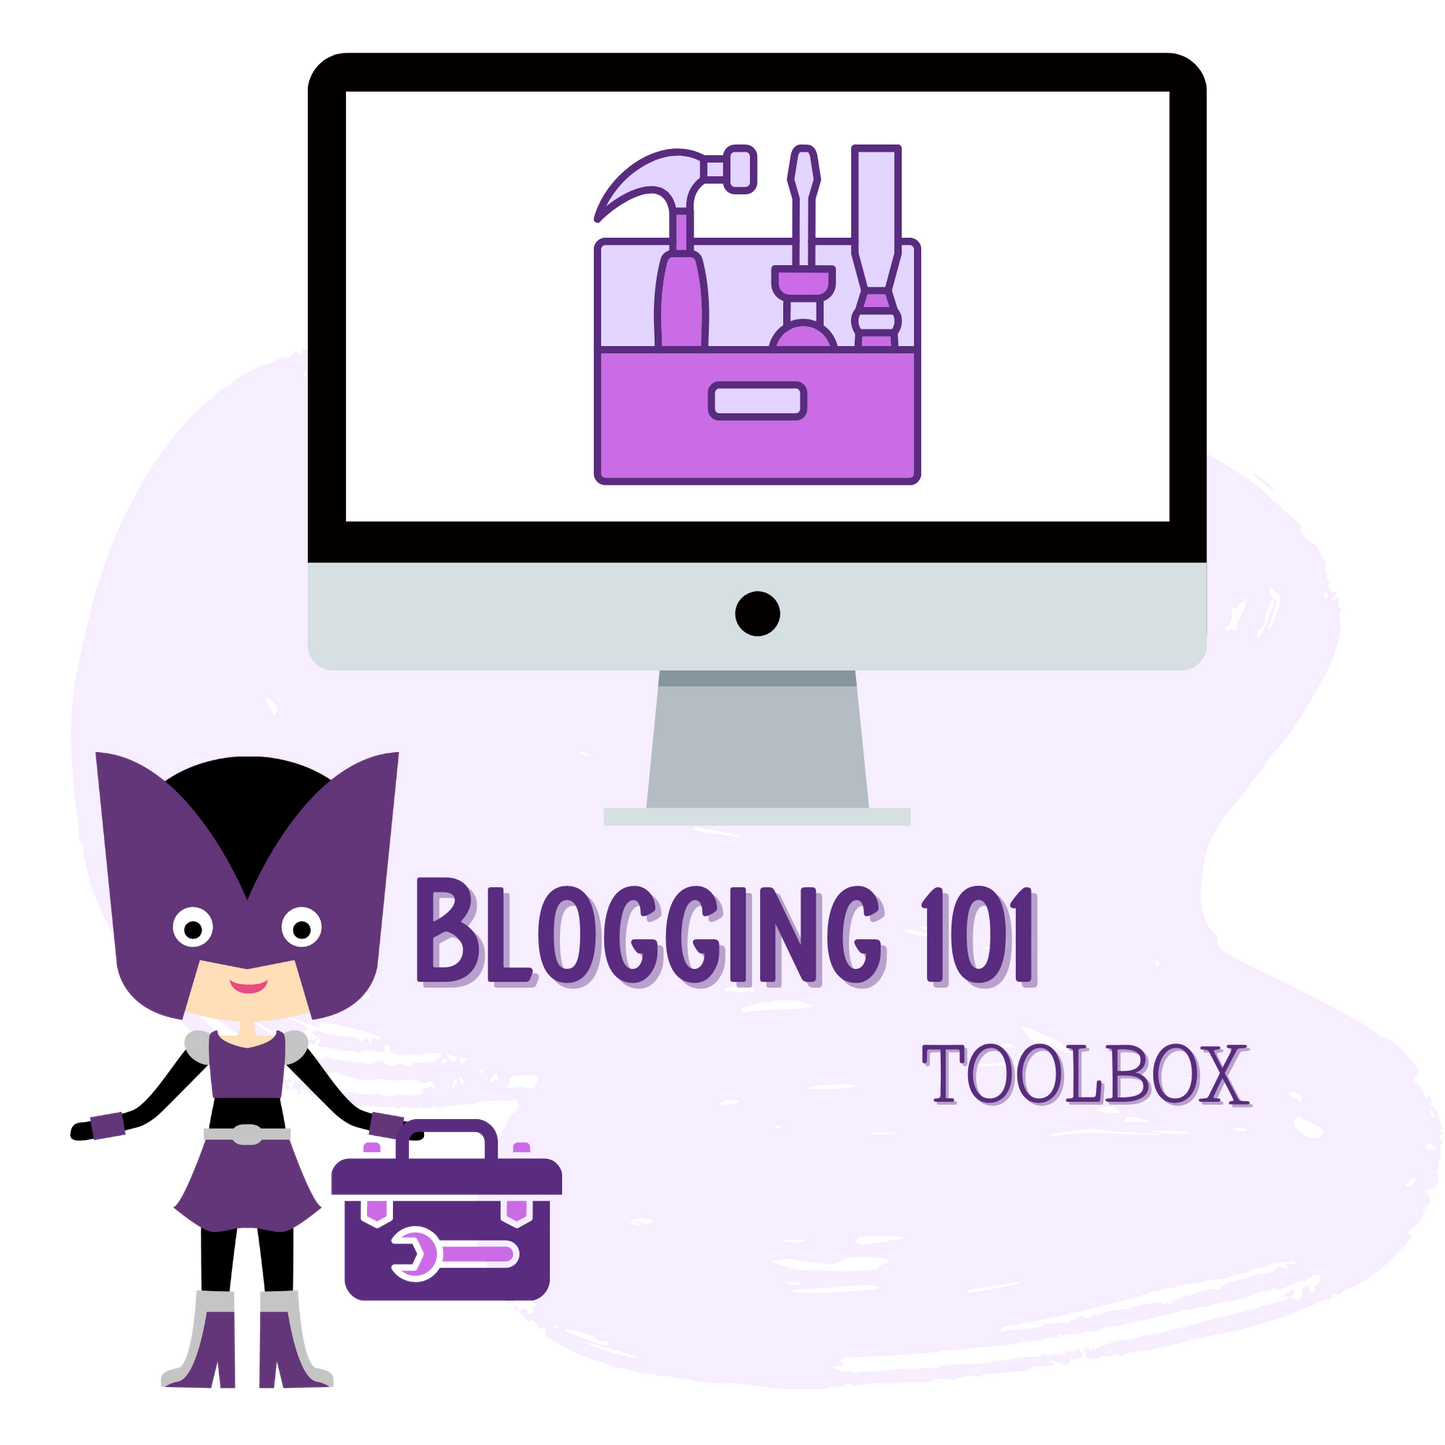 Blogging 101 Toolbox